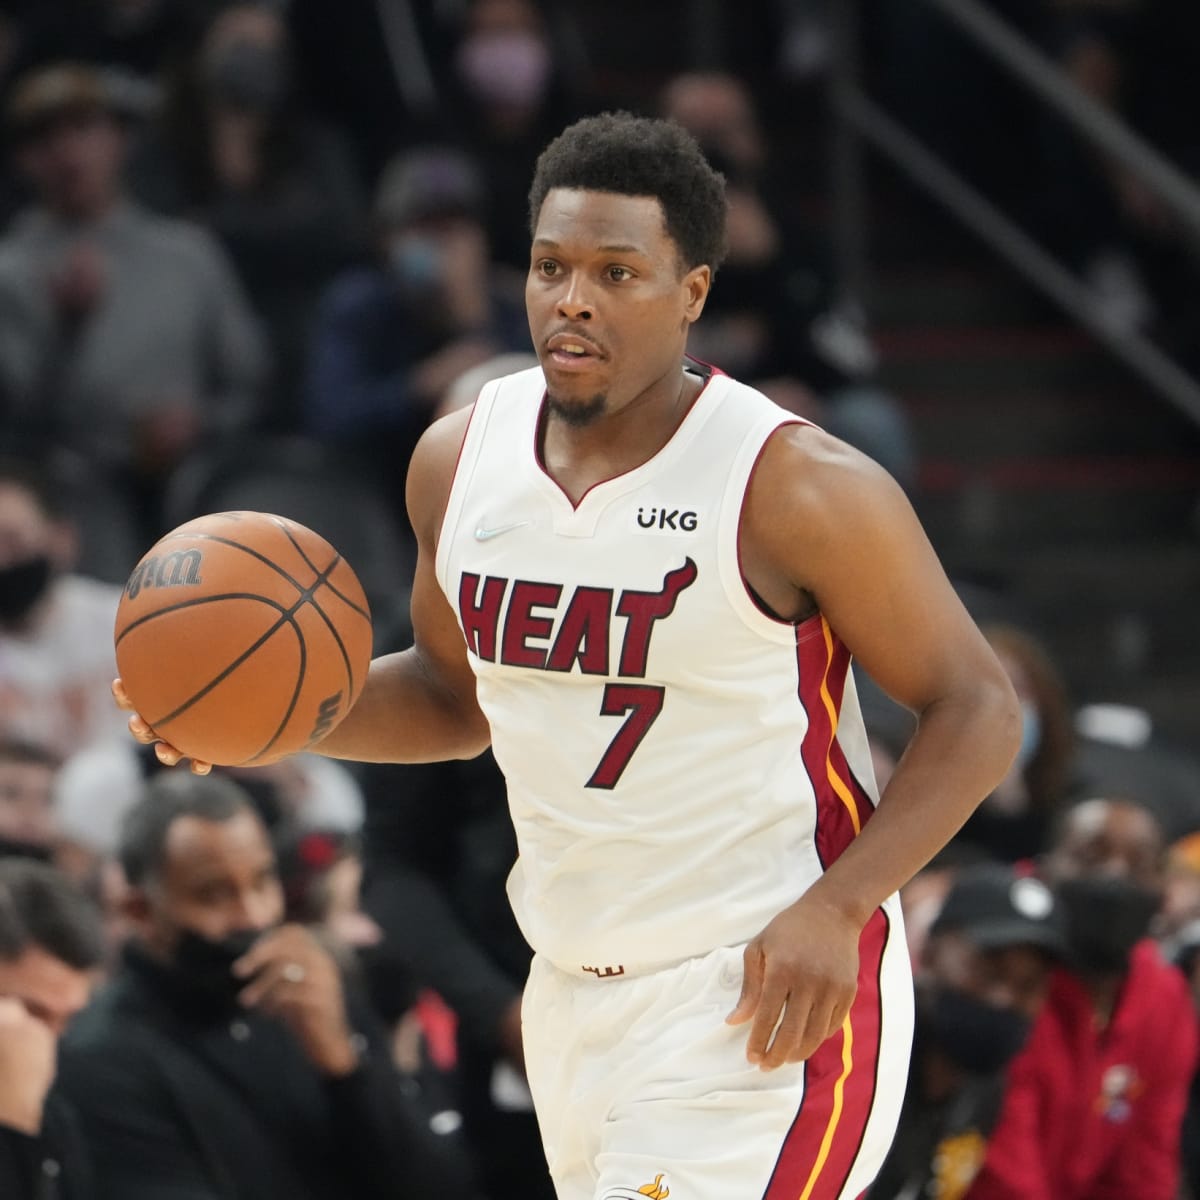 Do Miami Heat need Kyle Lowry present, even if tense?